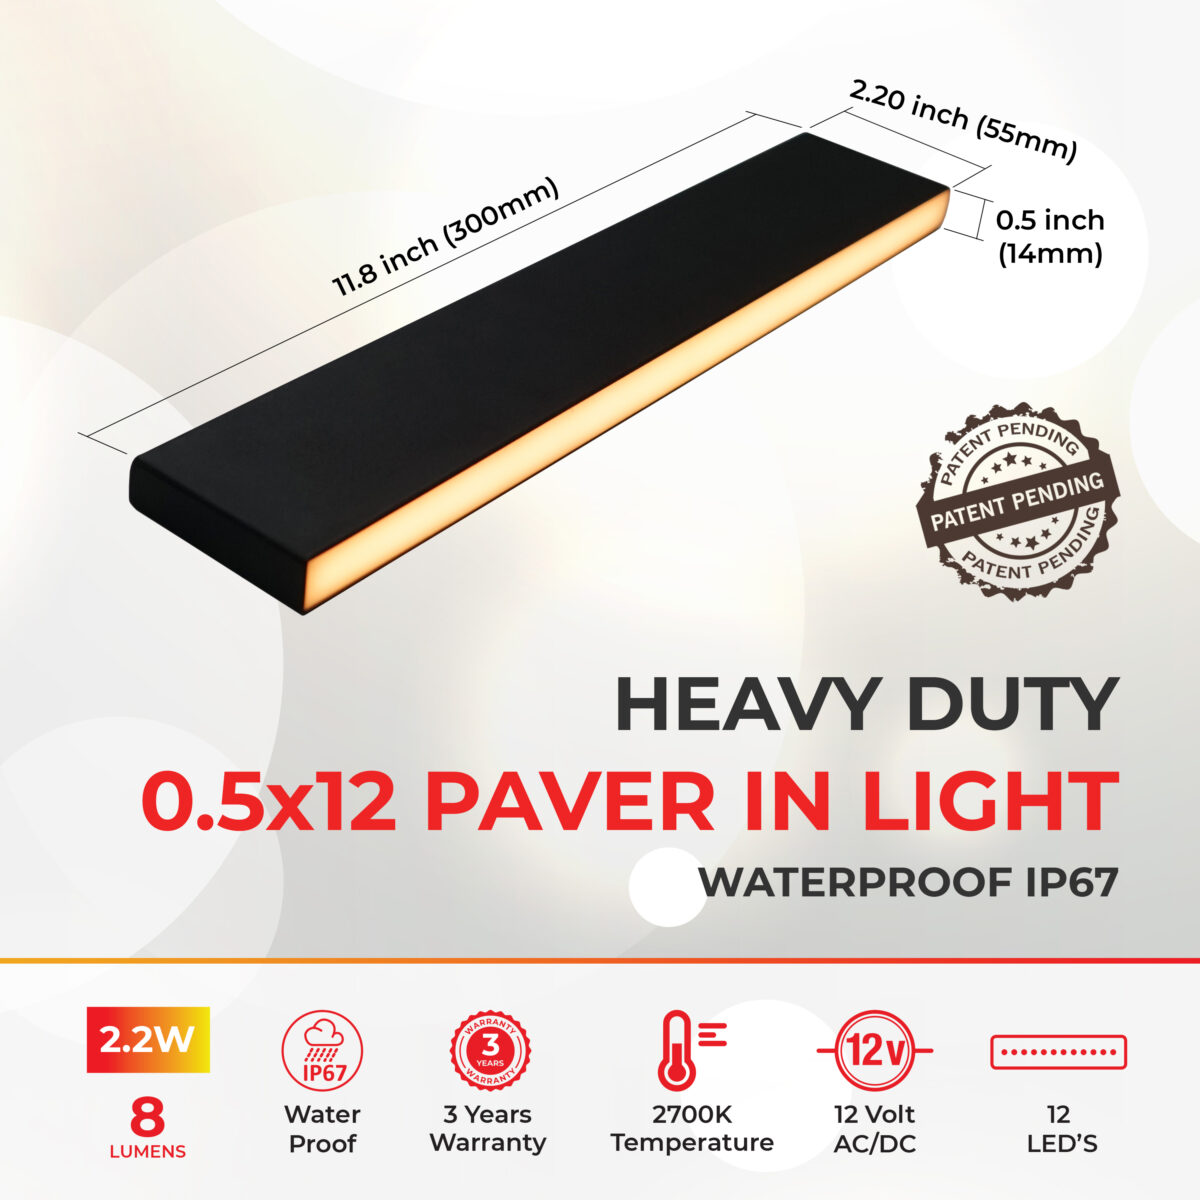 Waterproof Slim Paver Light - 0.5x12 Inch - IP67